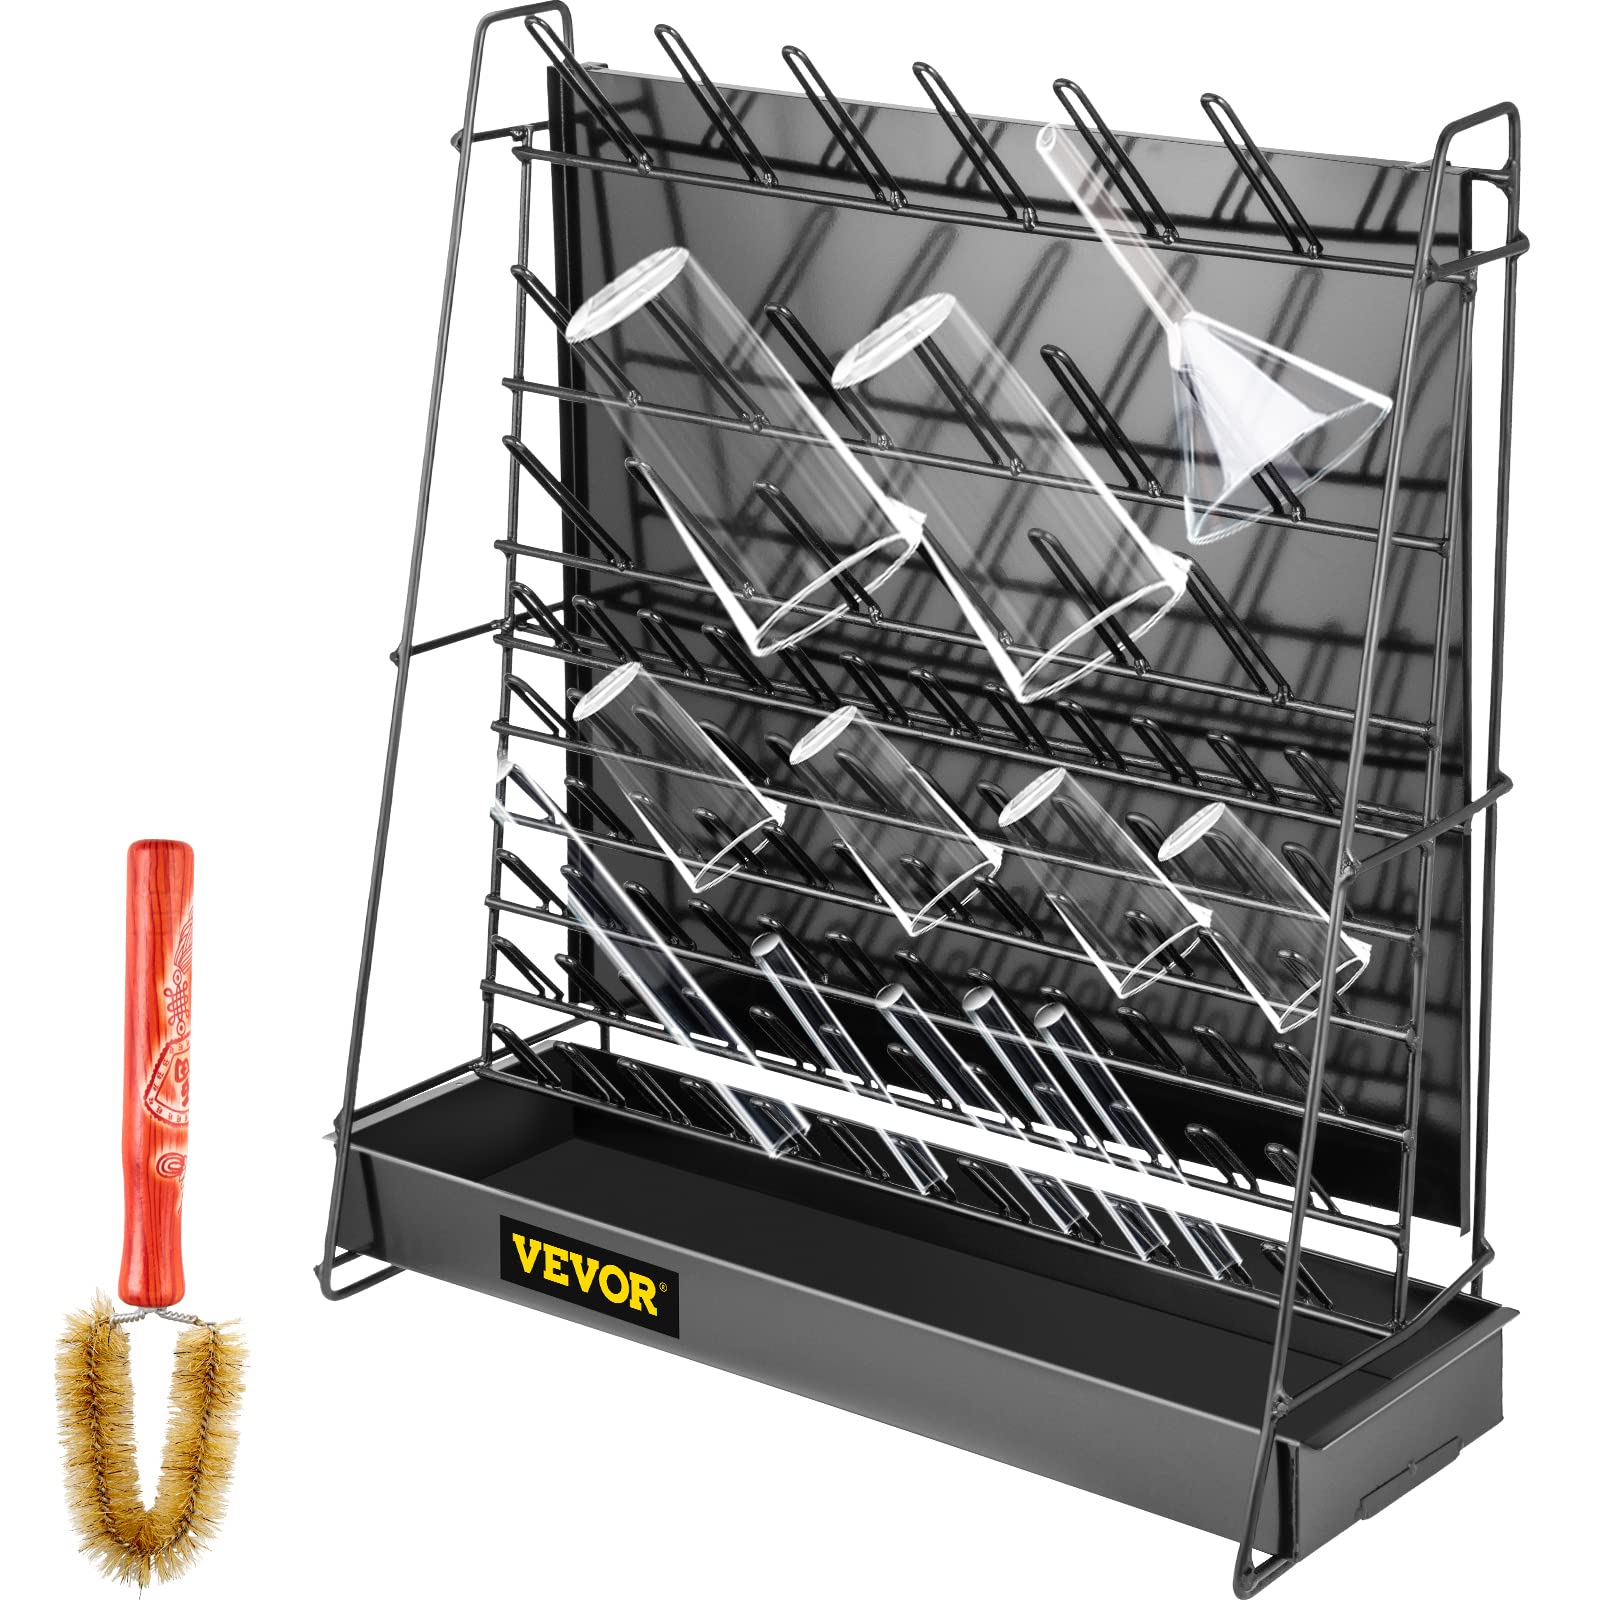 Vevor Drying Rack For Lab 90 Pegs Lab Glassware Rack Steel Wire Glassware Drying Rack Wall-Mountfree-Standing Detachable Pegs La